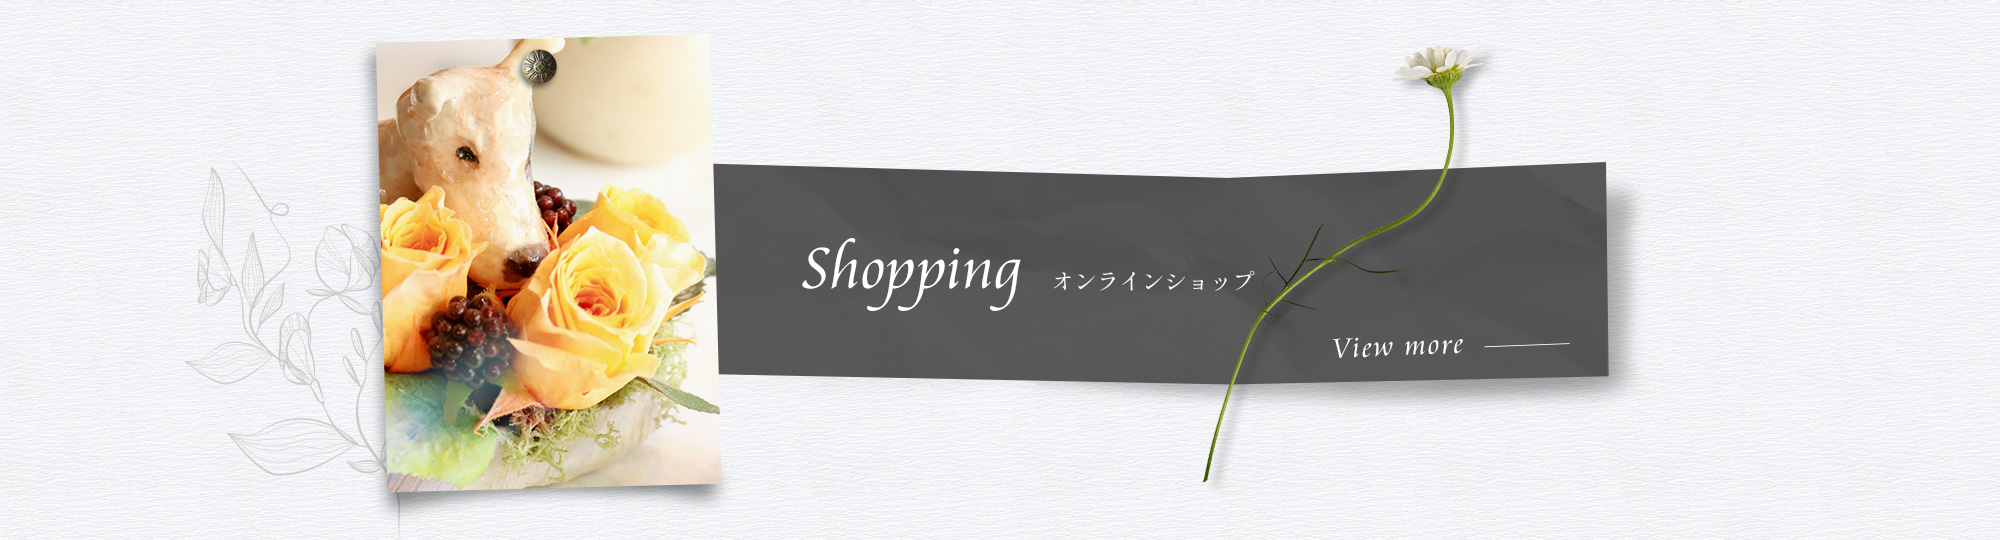 banner_shopping